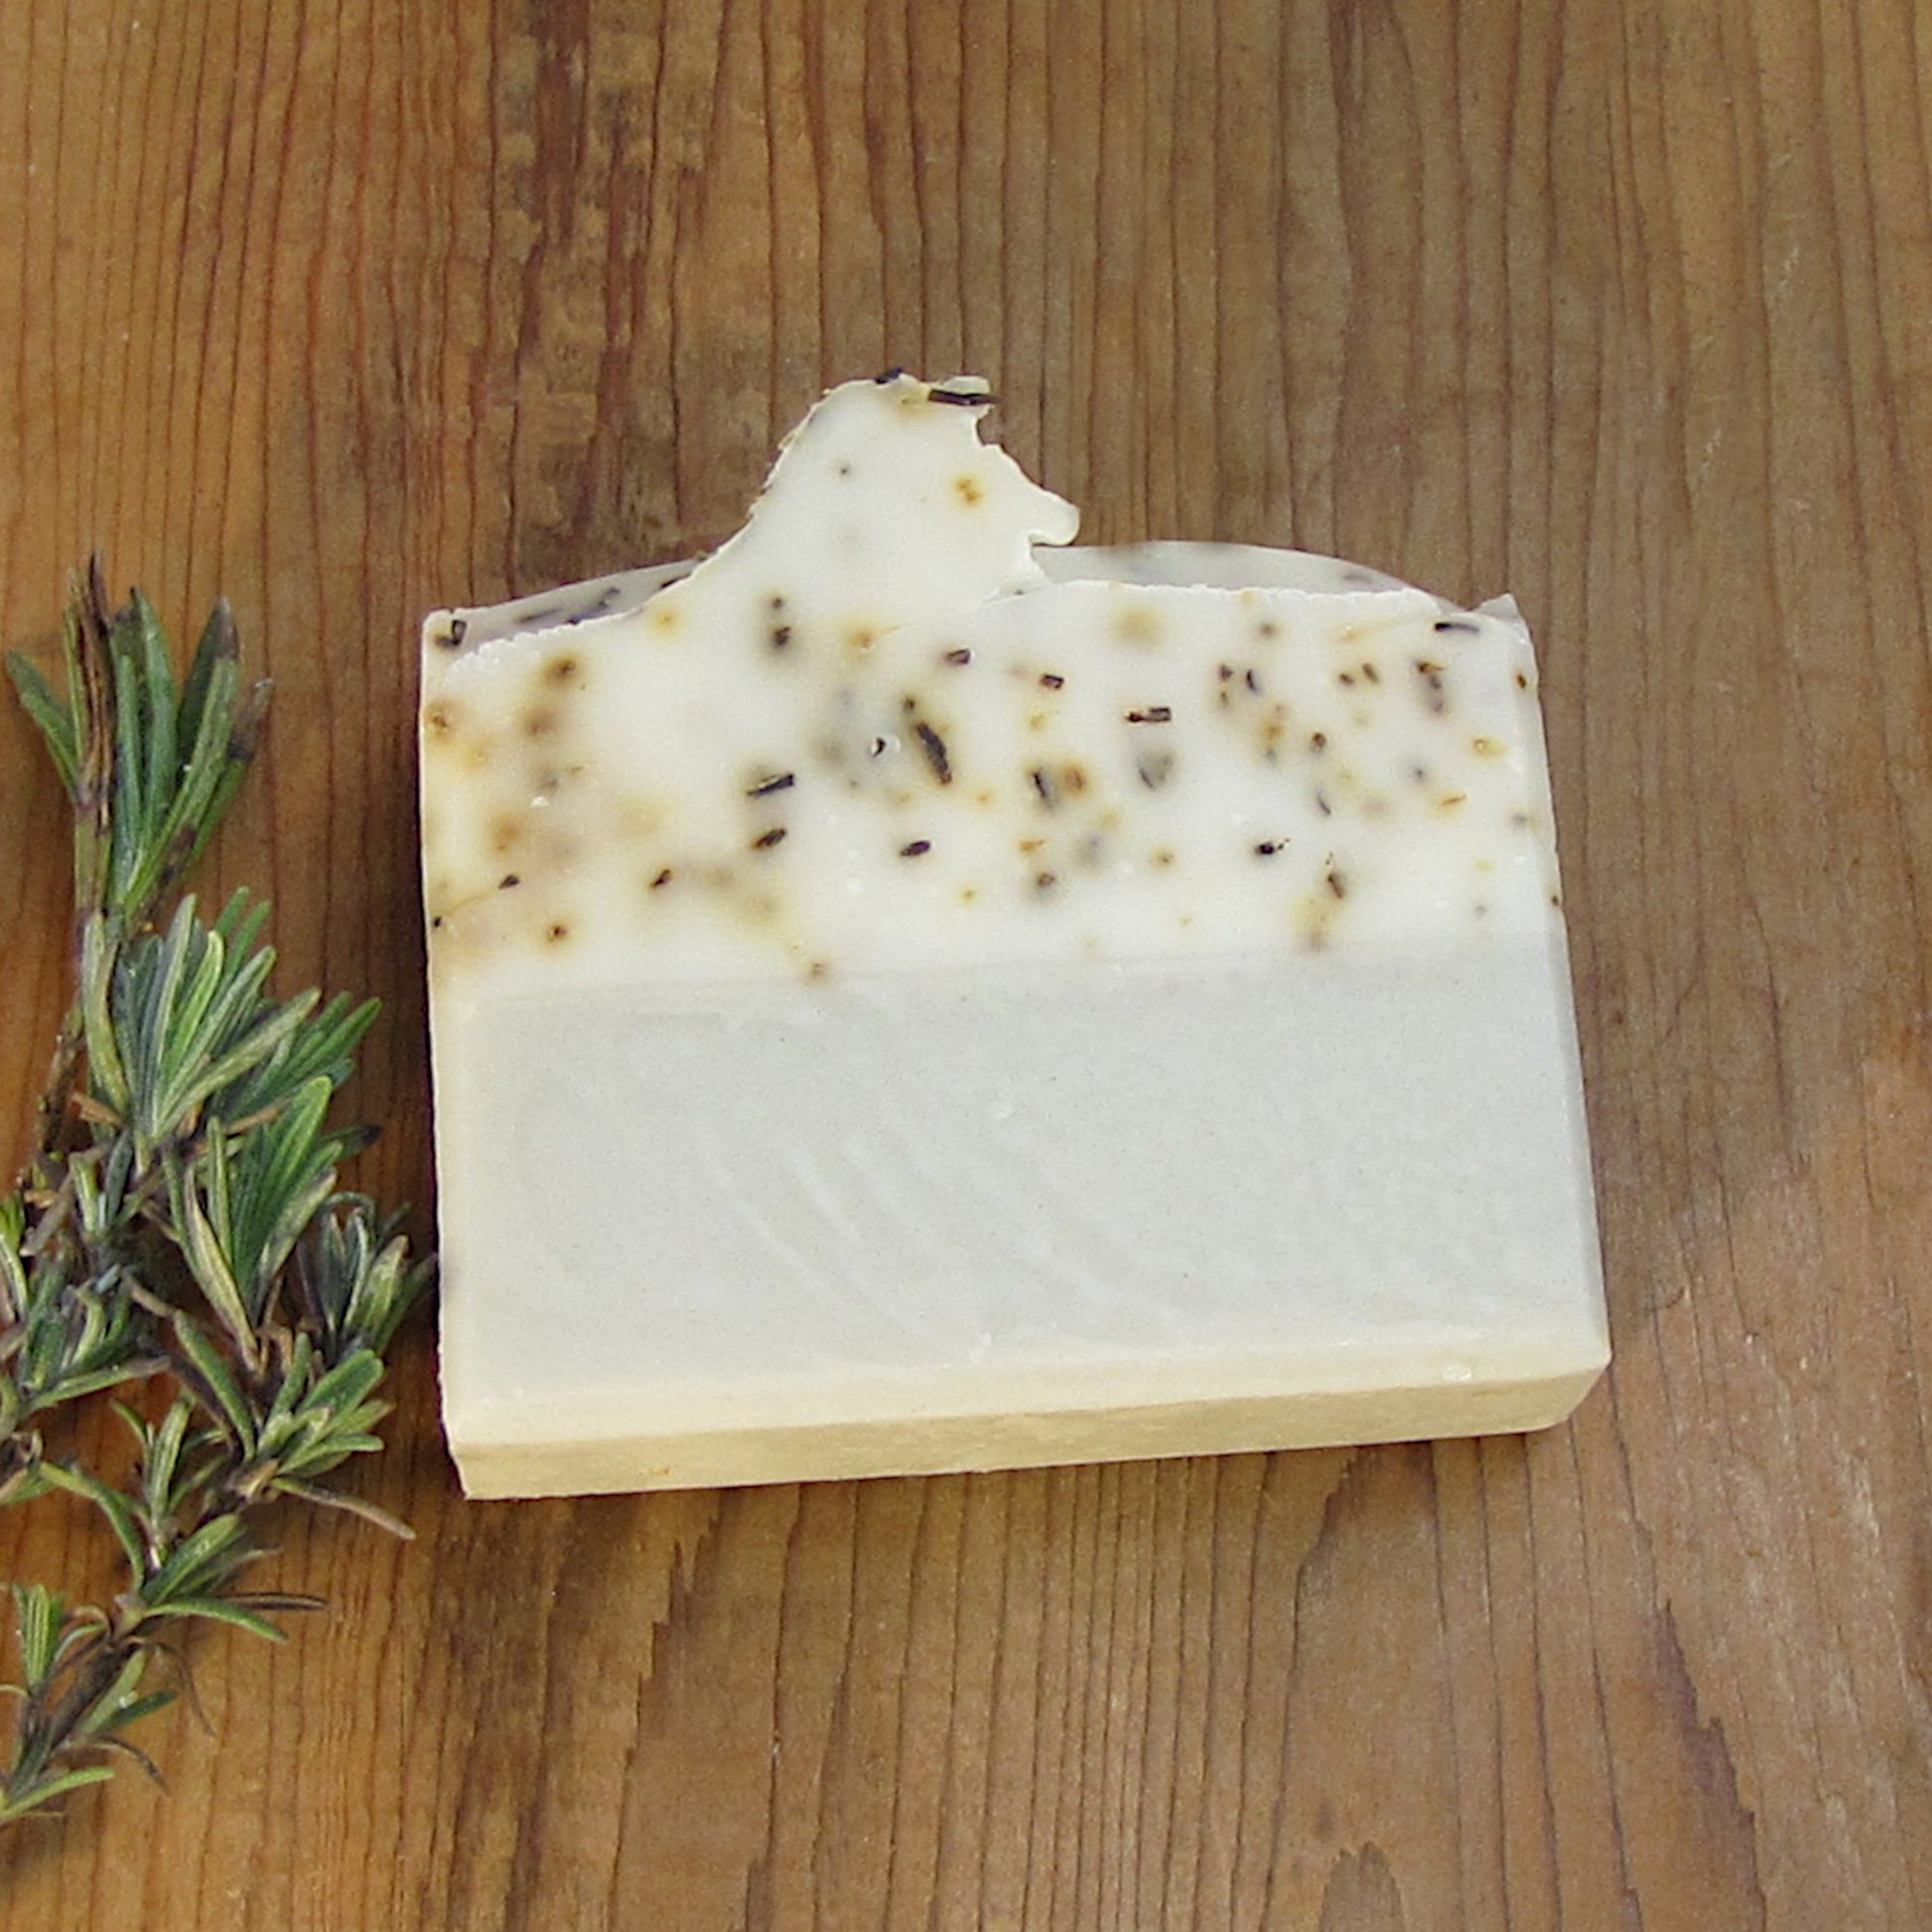 soap with mild exfoliation